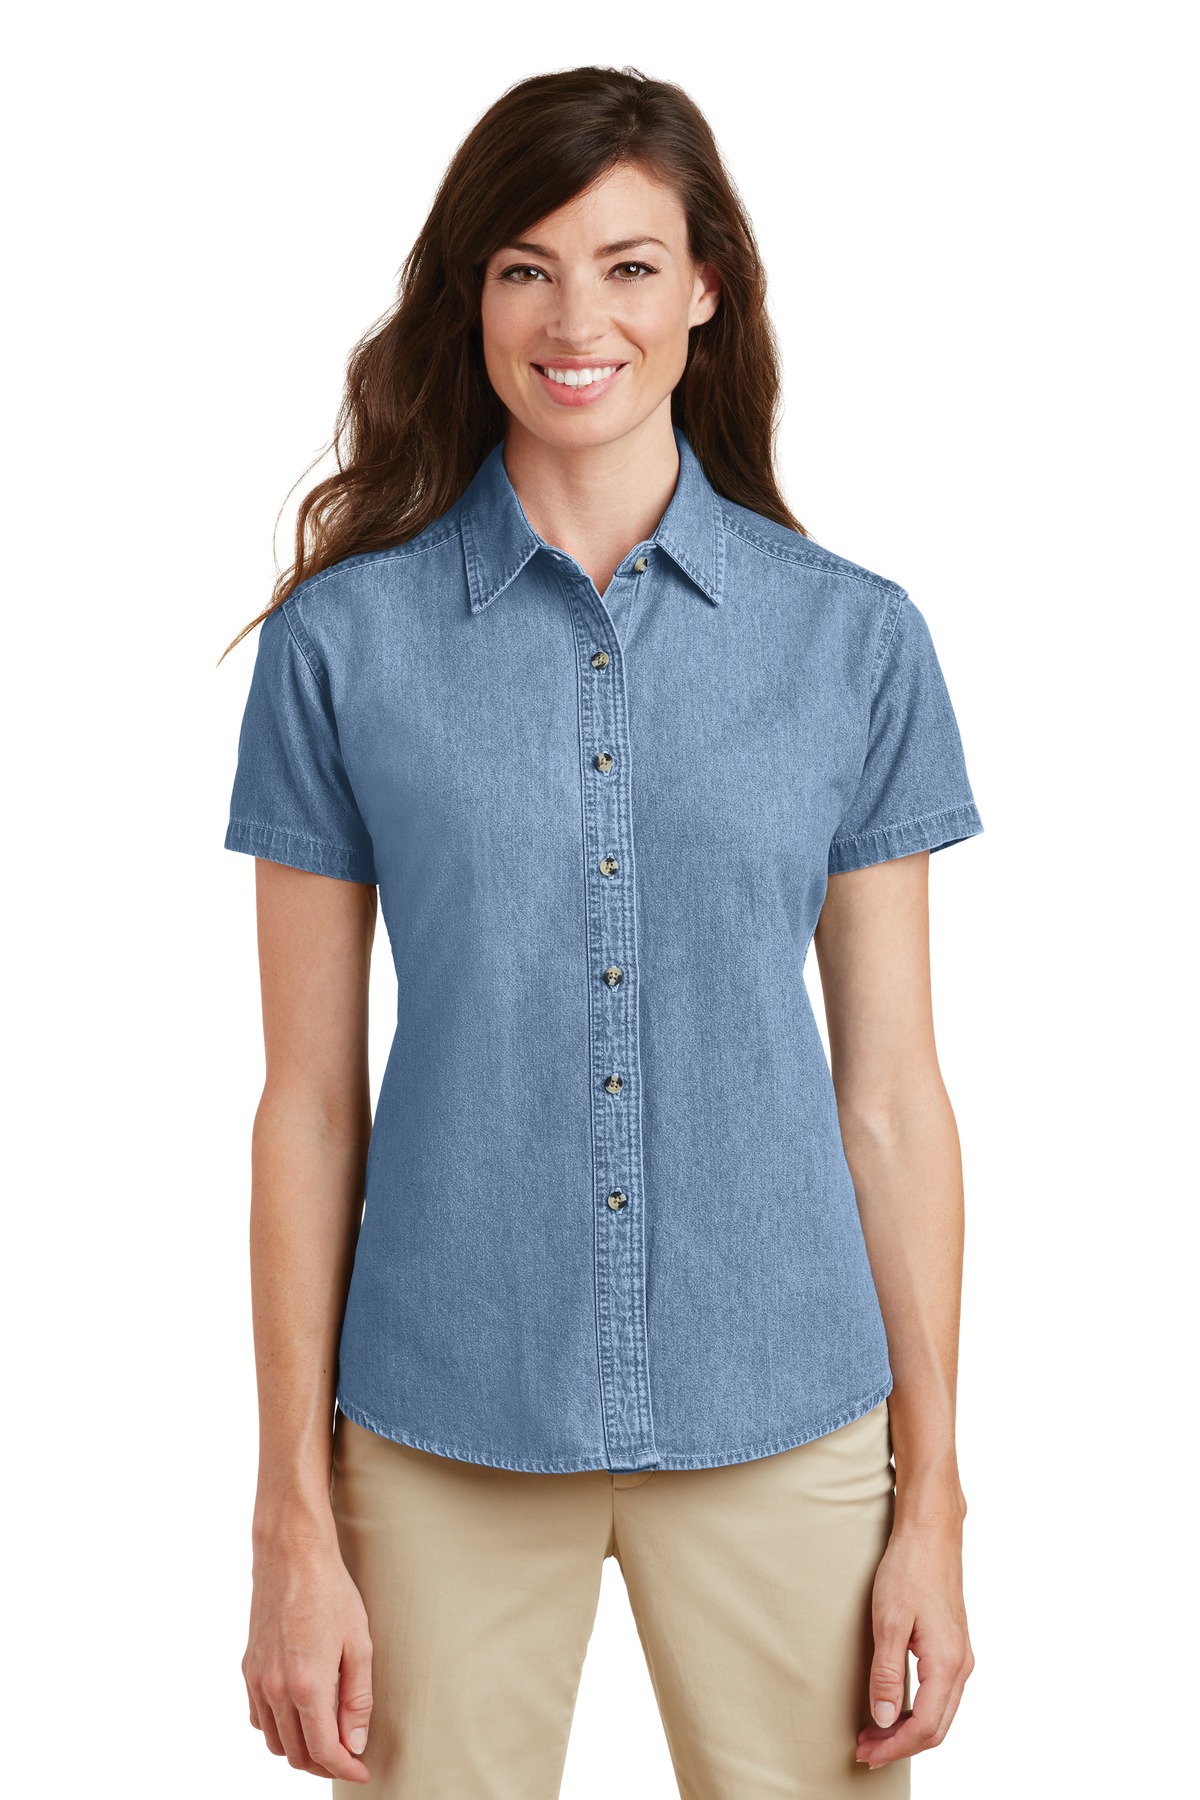 H&M Chambray Denim Shirt Womens Size 4 Long Sleeve Pearl Snaps Western  Style | eBay